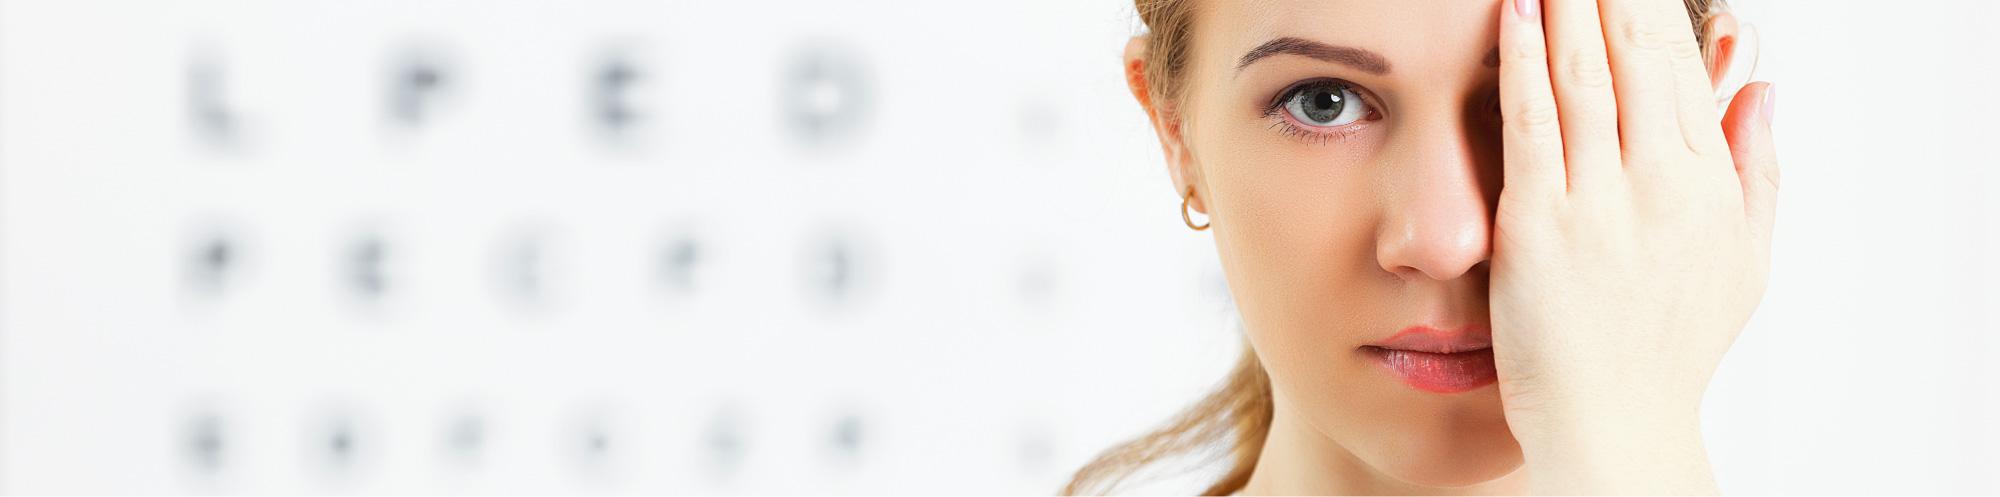 Grauer Star (Katarakt) - Augenarztpraxis Buchen